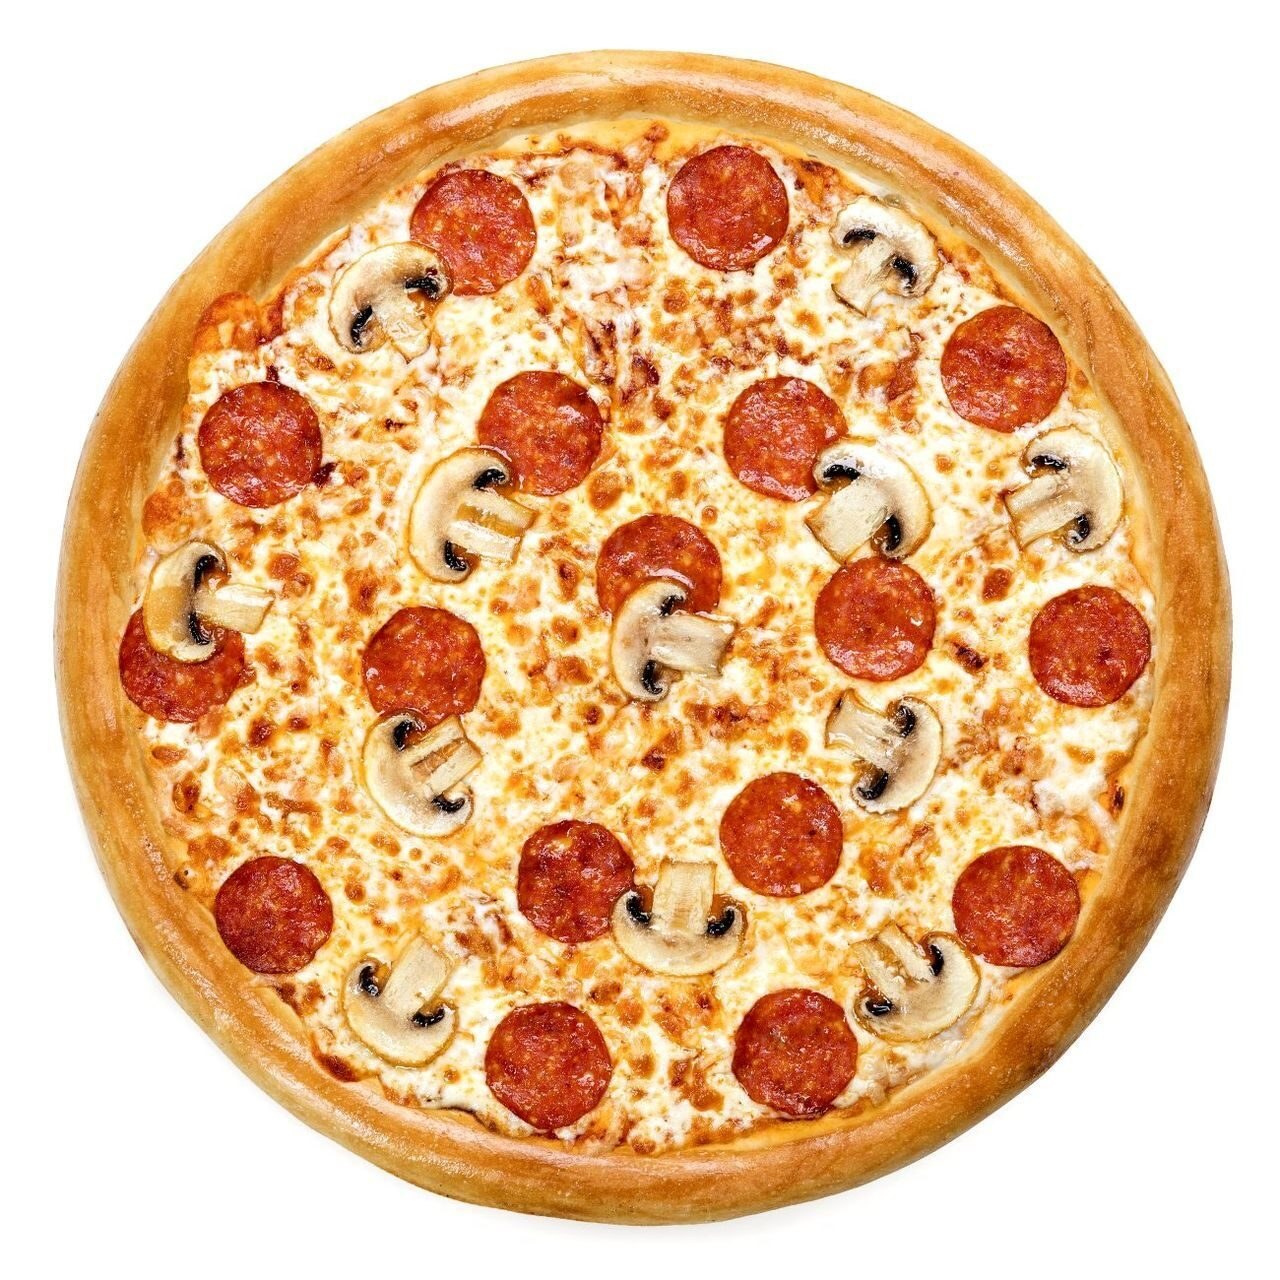 состав пиццы маргарита и пепперони фото 77